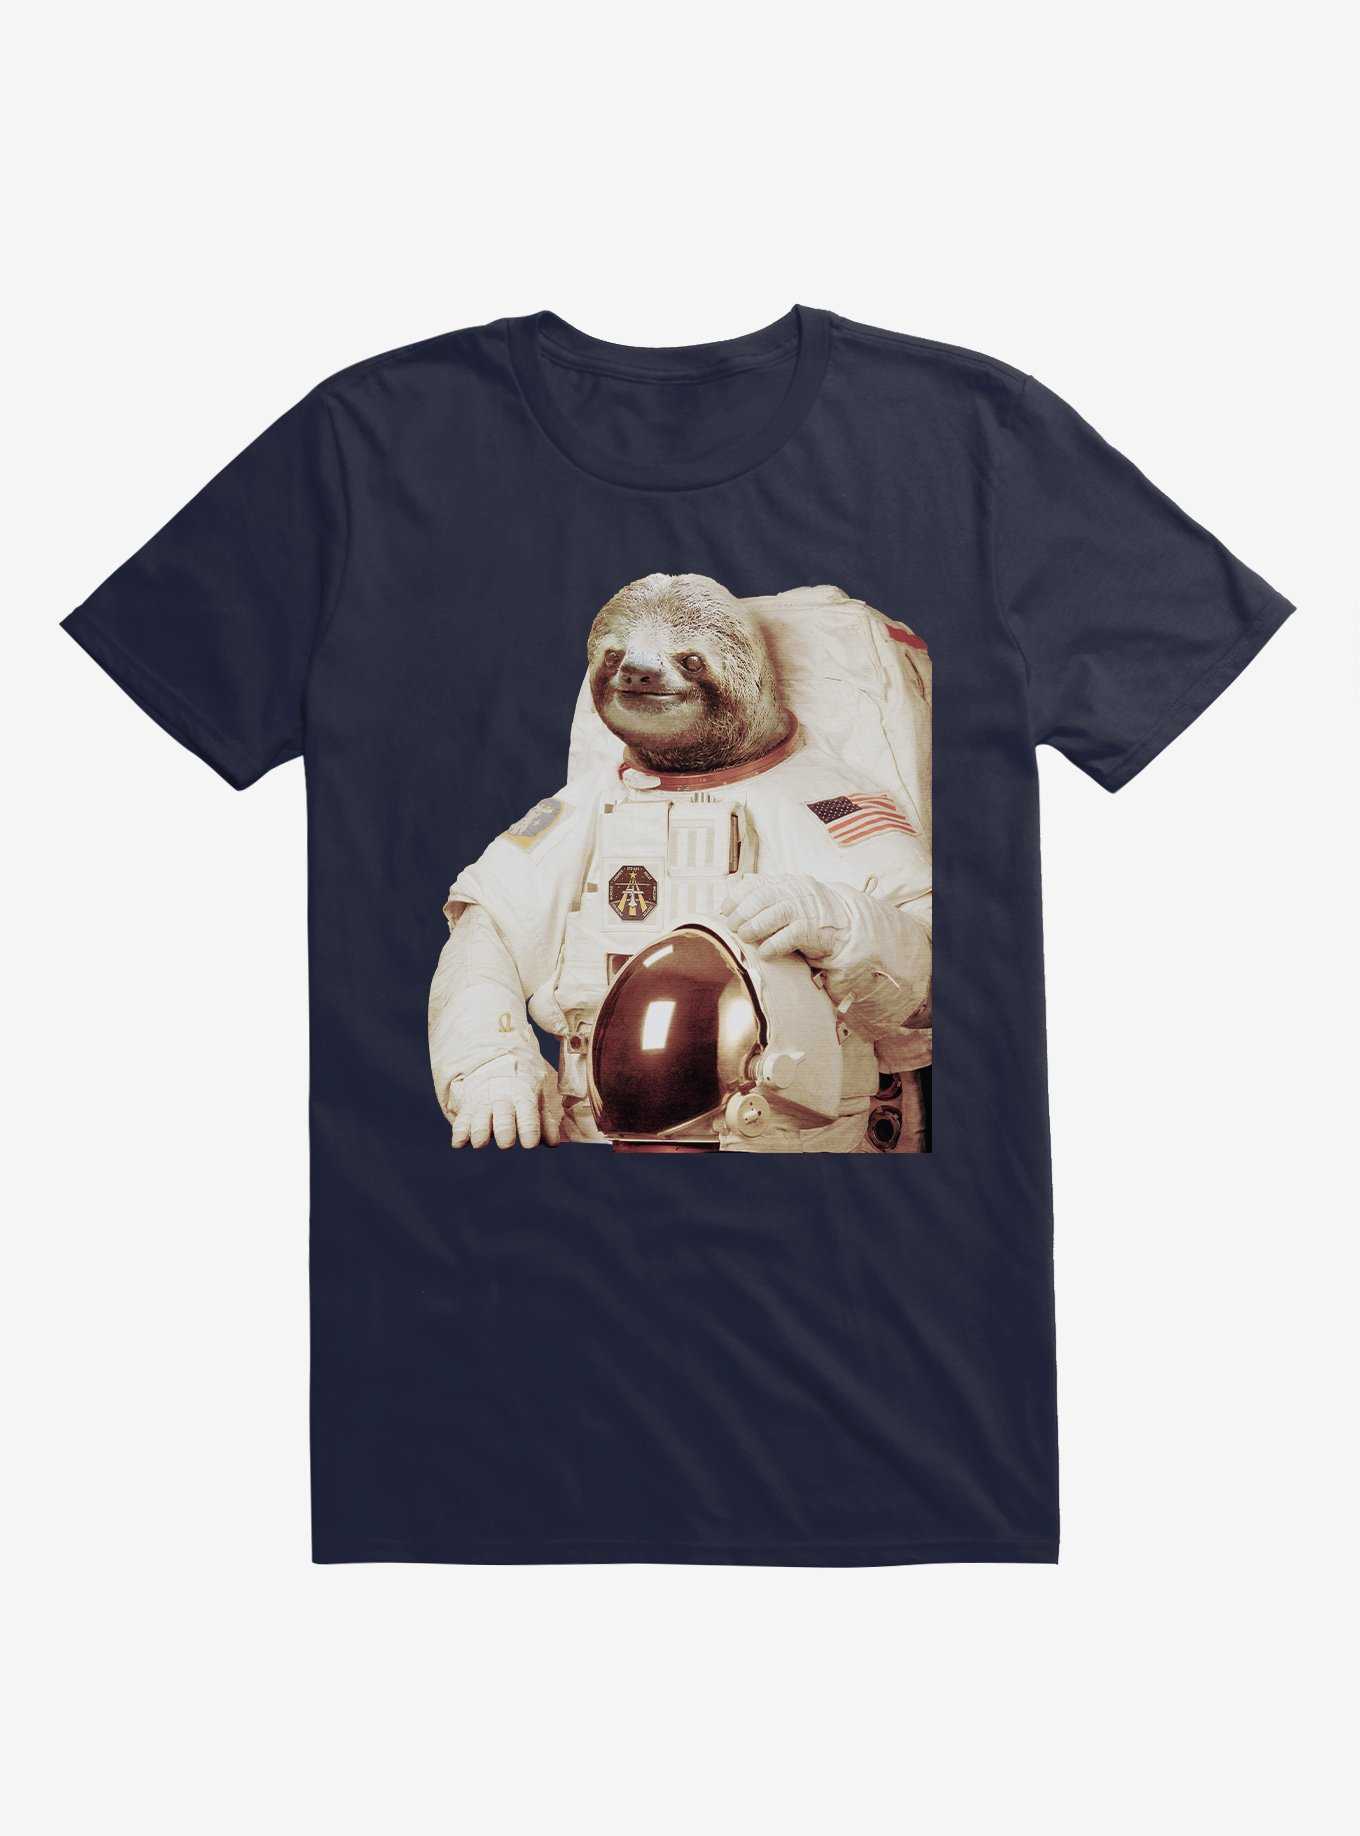 Astronaut Sloth Navy Blue T-Shirt, , hi-res